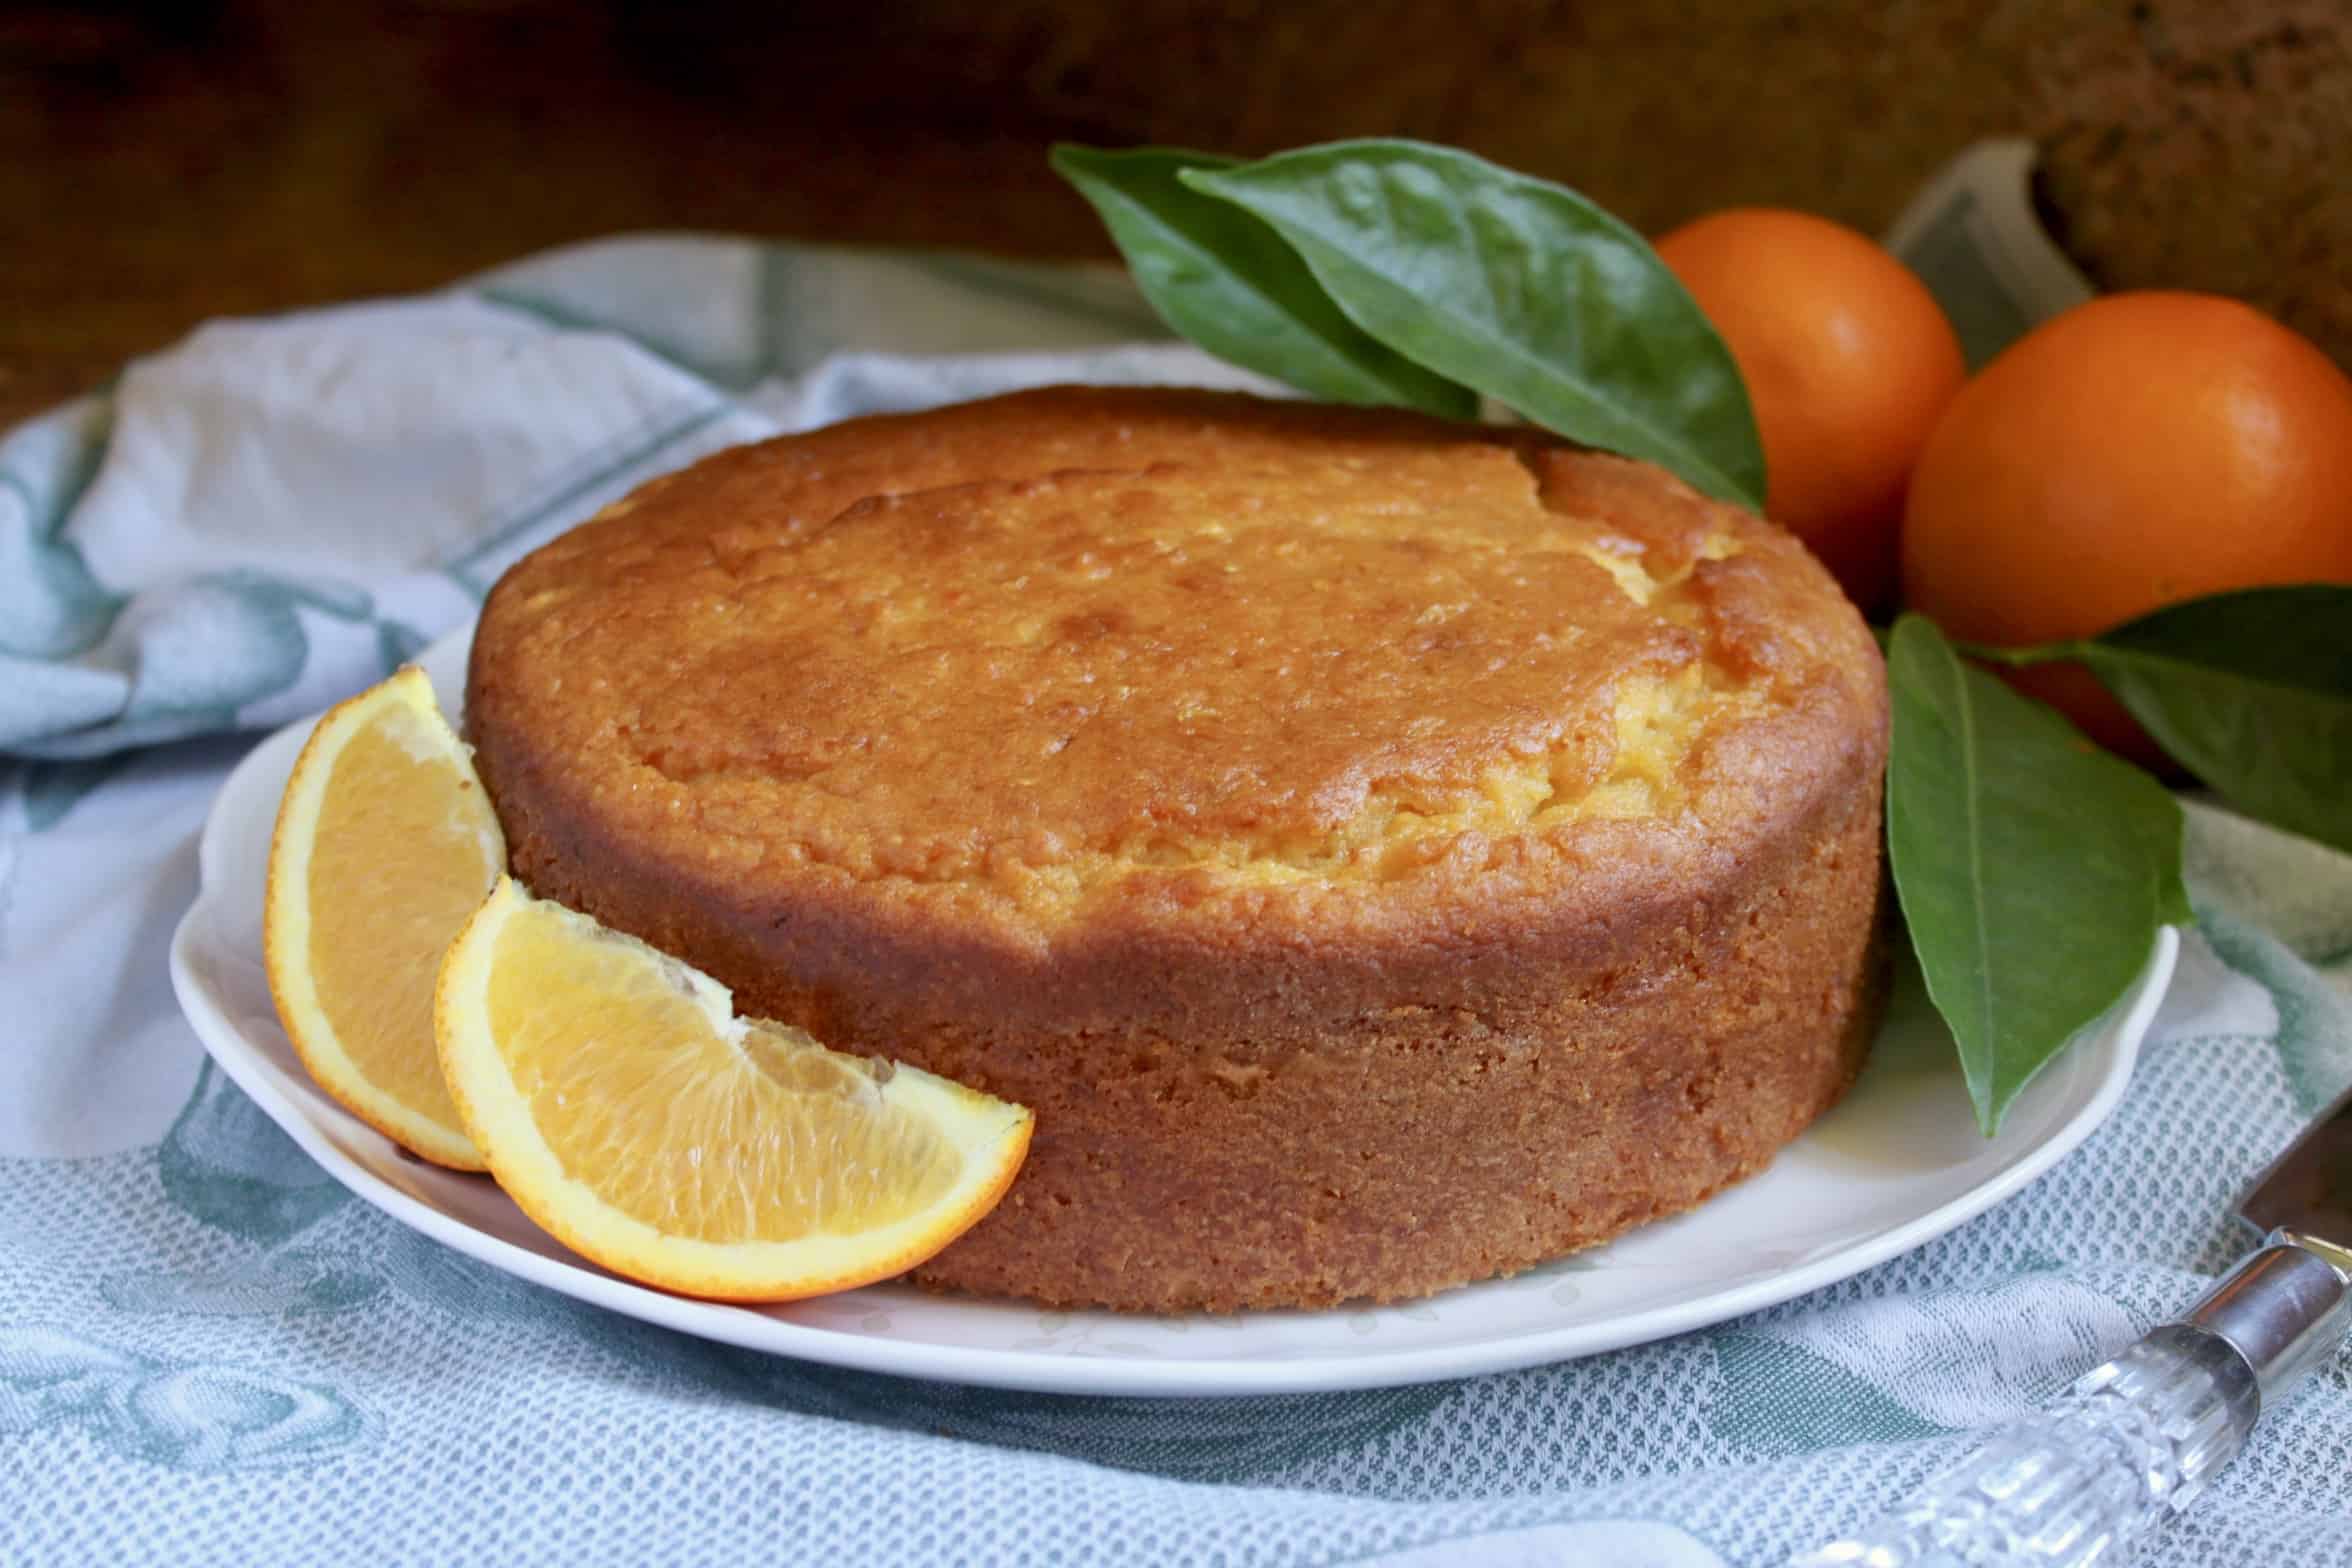 Sicilian Whole Orange cake on a plate with oranges